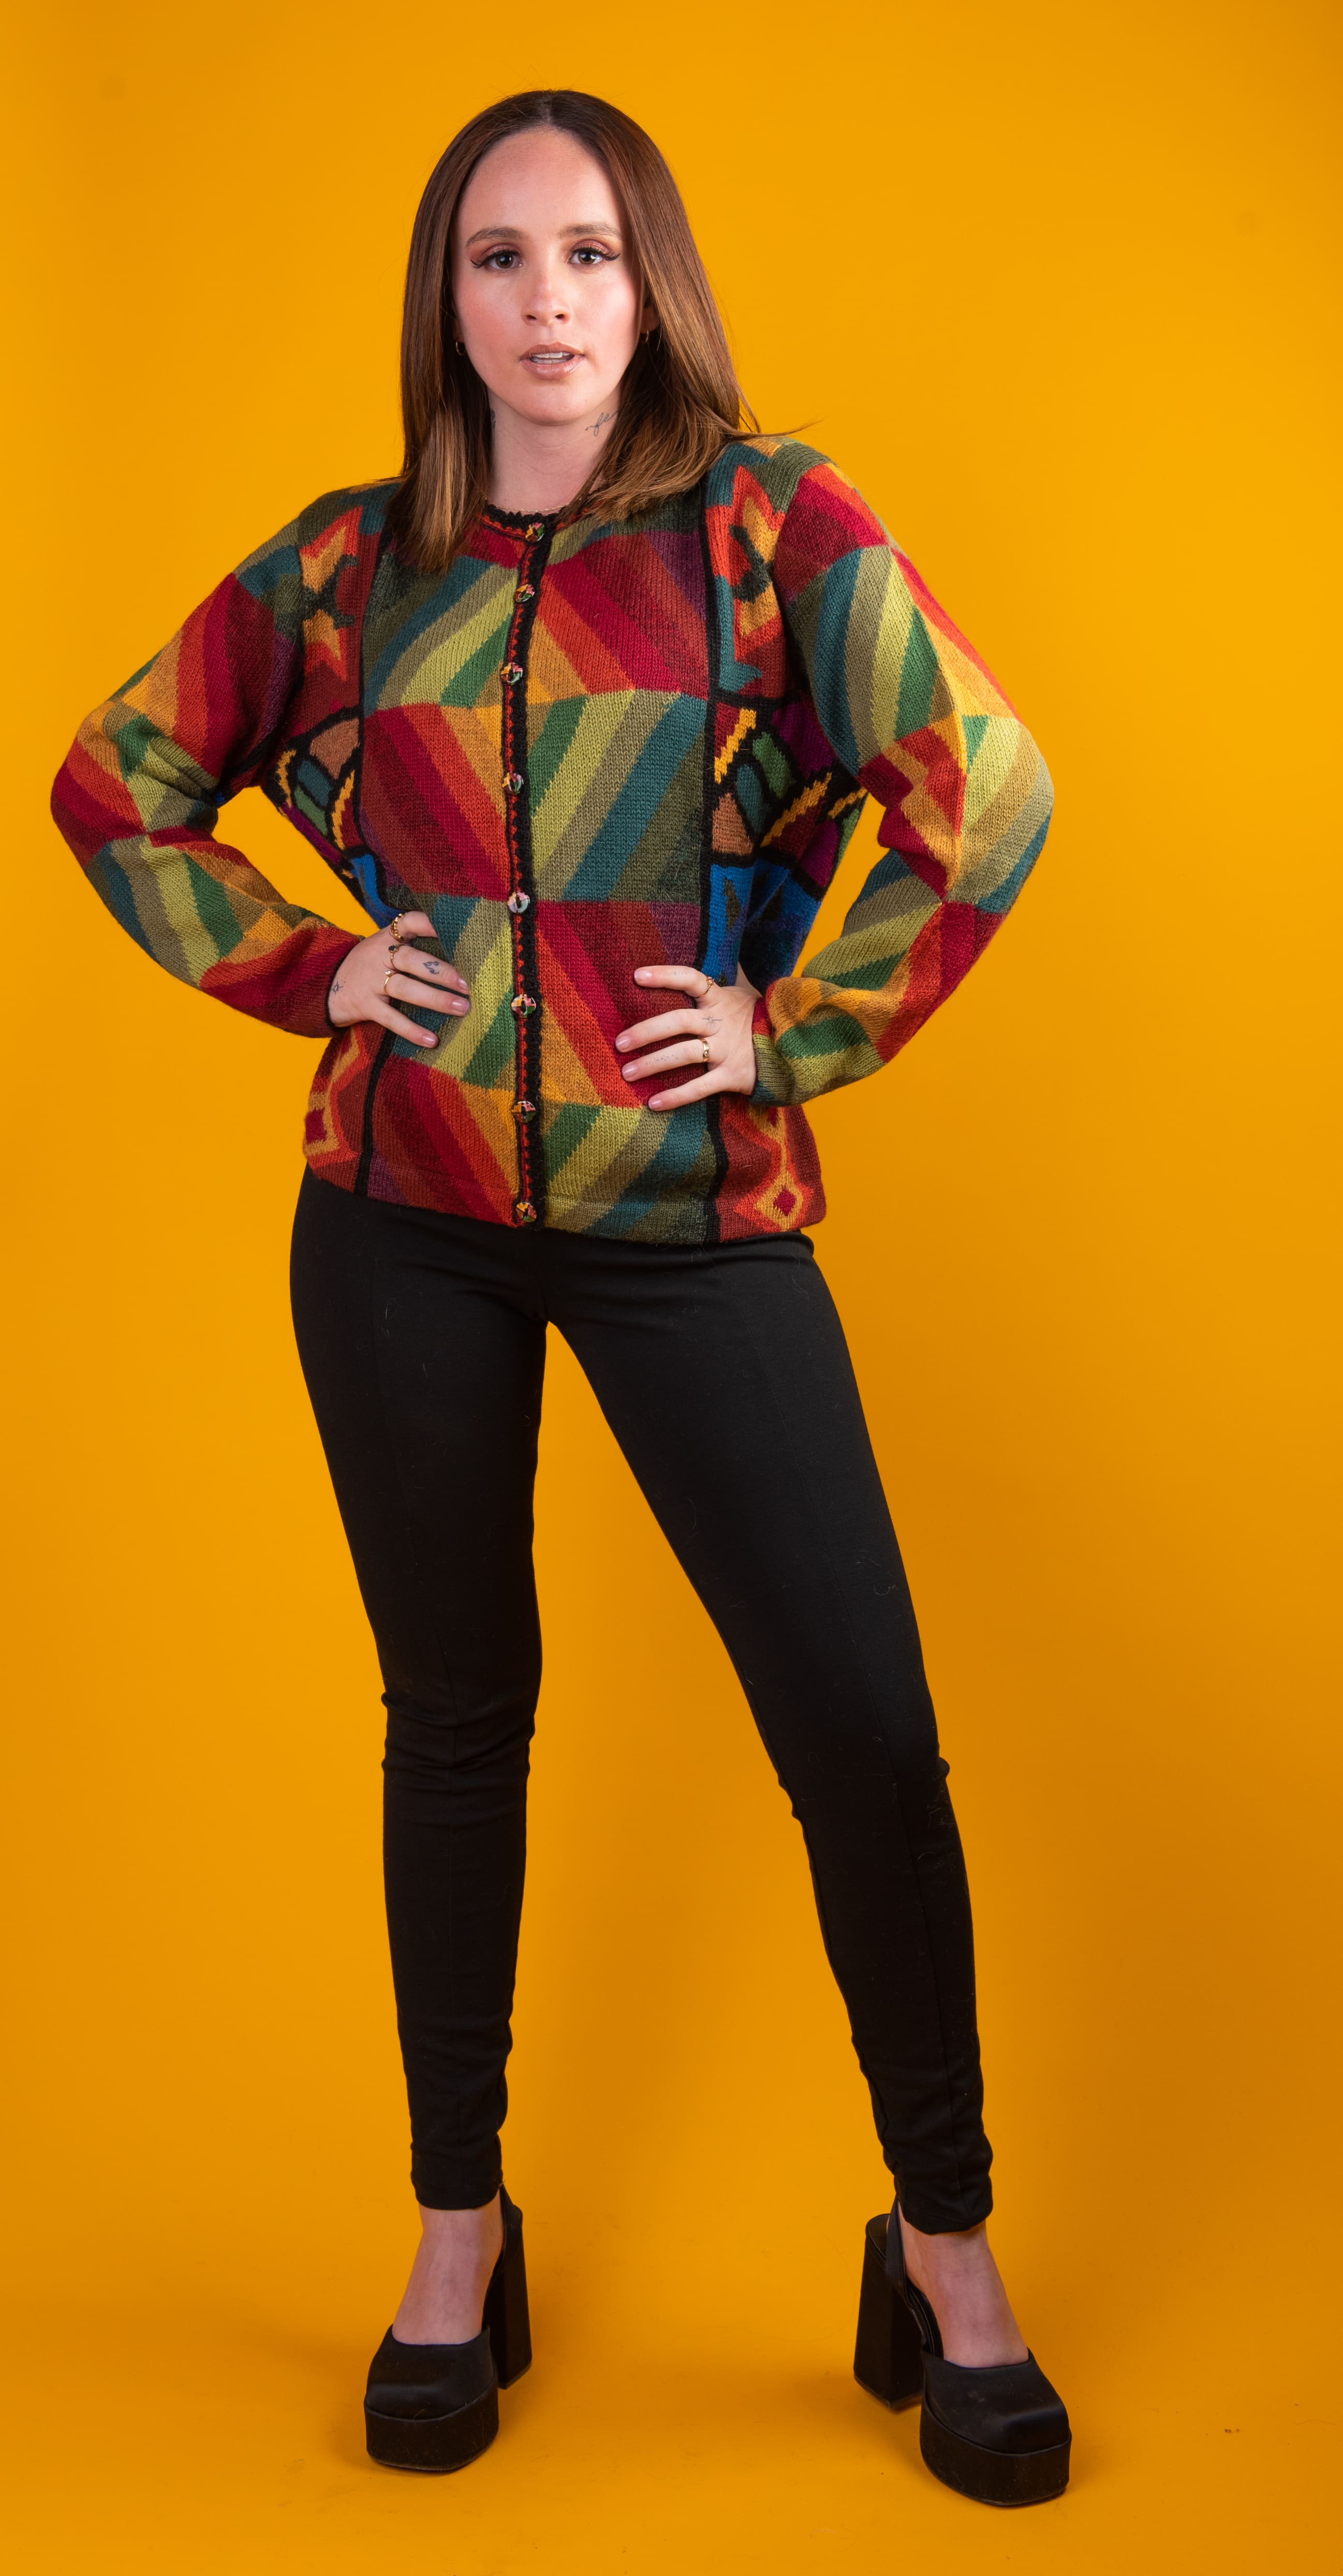 Garment: Rainbow Cardigan <br> Knitted in Flat Stitch <br> Composition: 100% Alpaca <br> Sizes: S, M, L, XL, XXL.